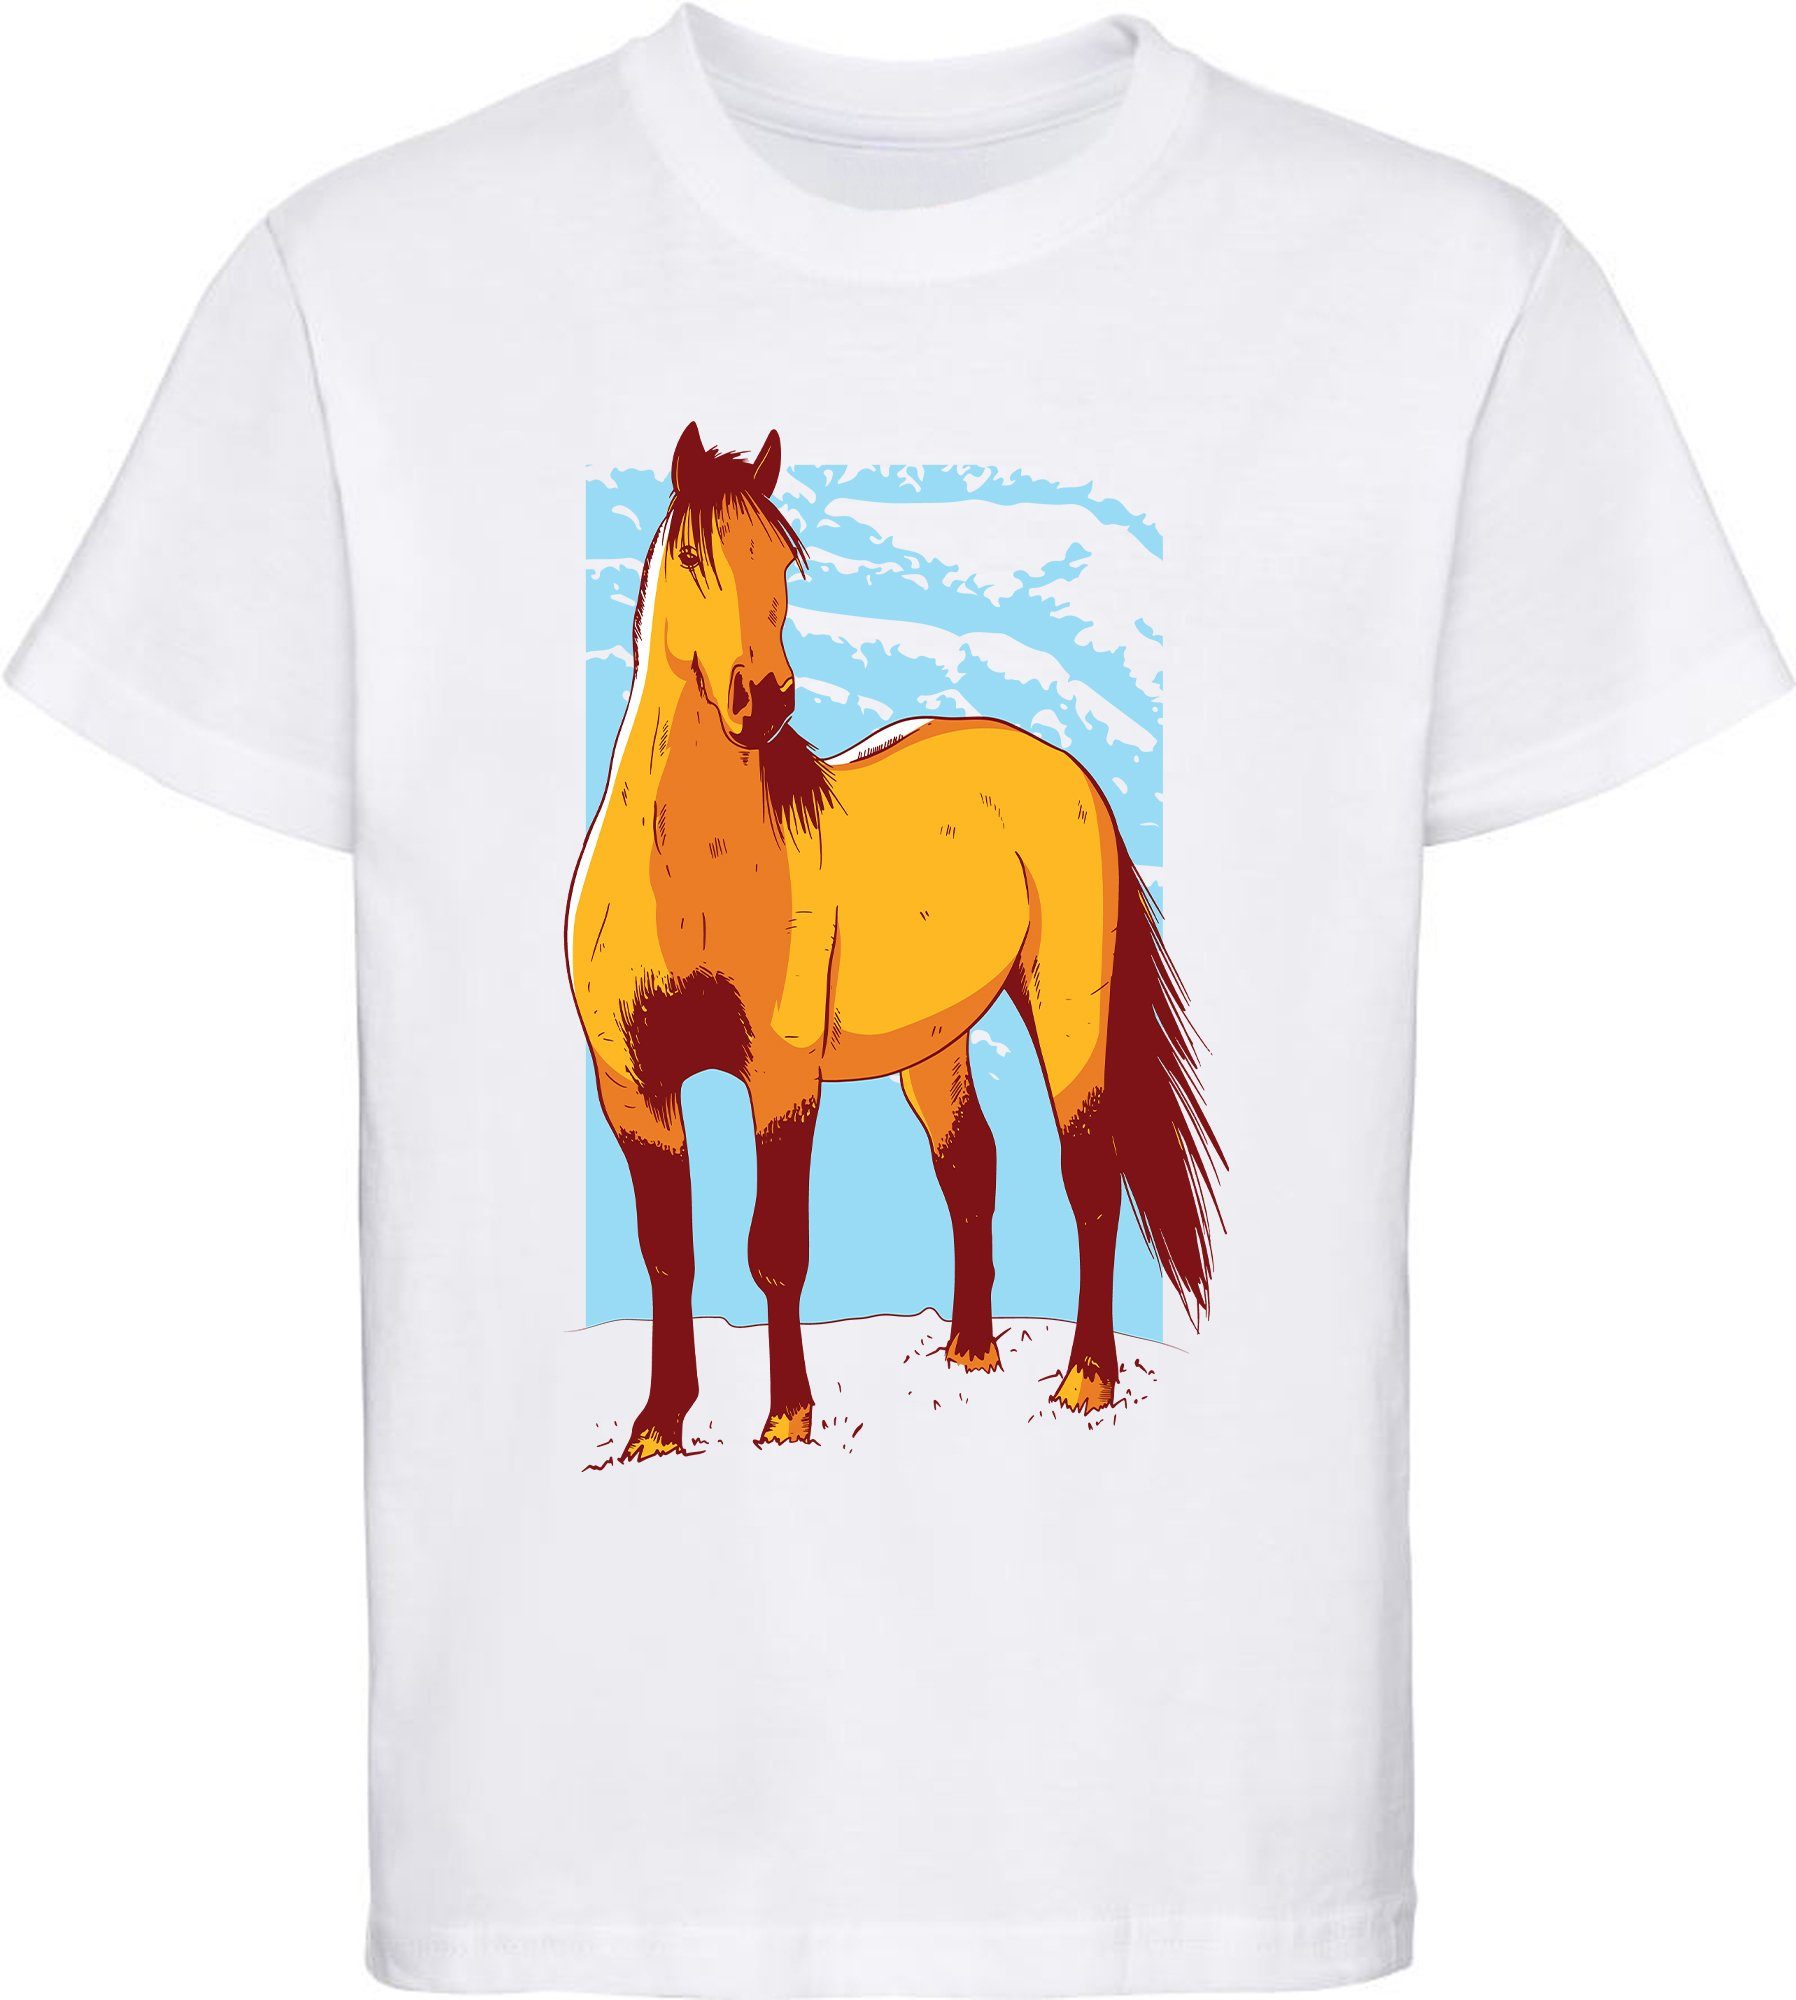 Mädchen T-Shirt elegantes Print-Shirt weiss bedrucktes Pferd i155 Baumwollshirt mit Aufdruck, MyDesign24